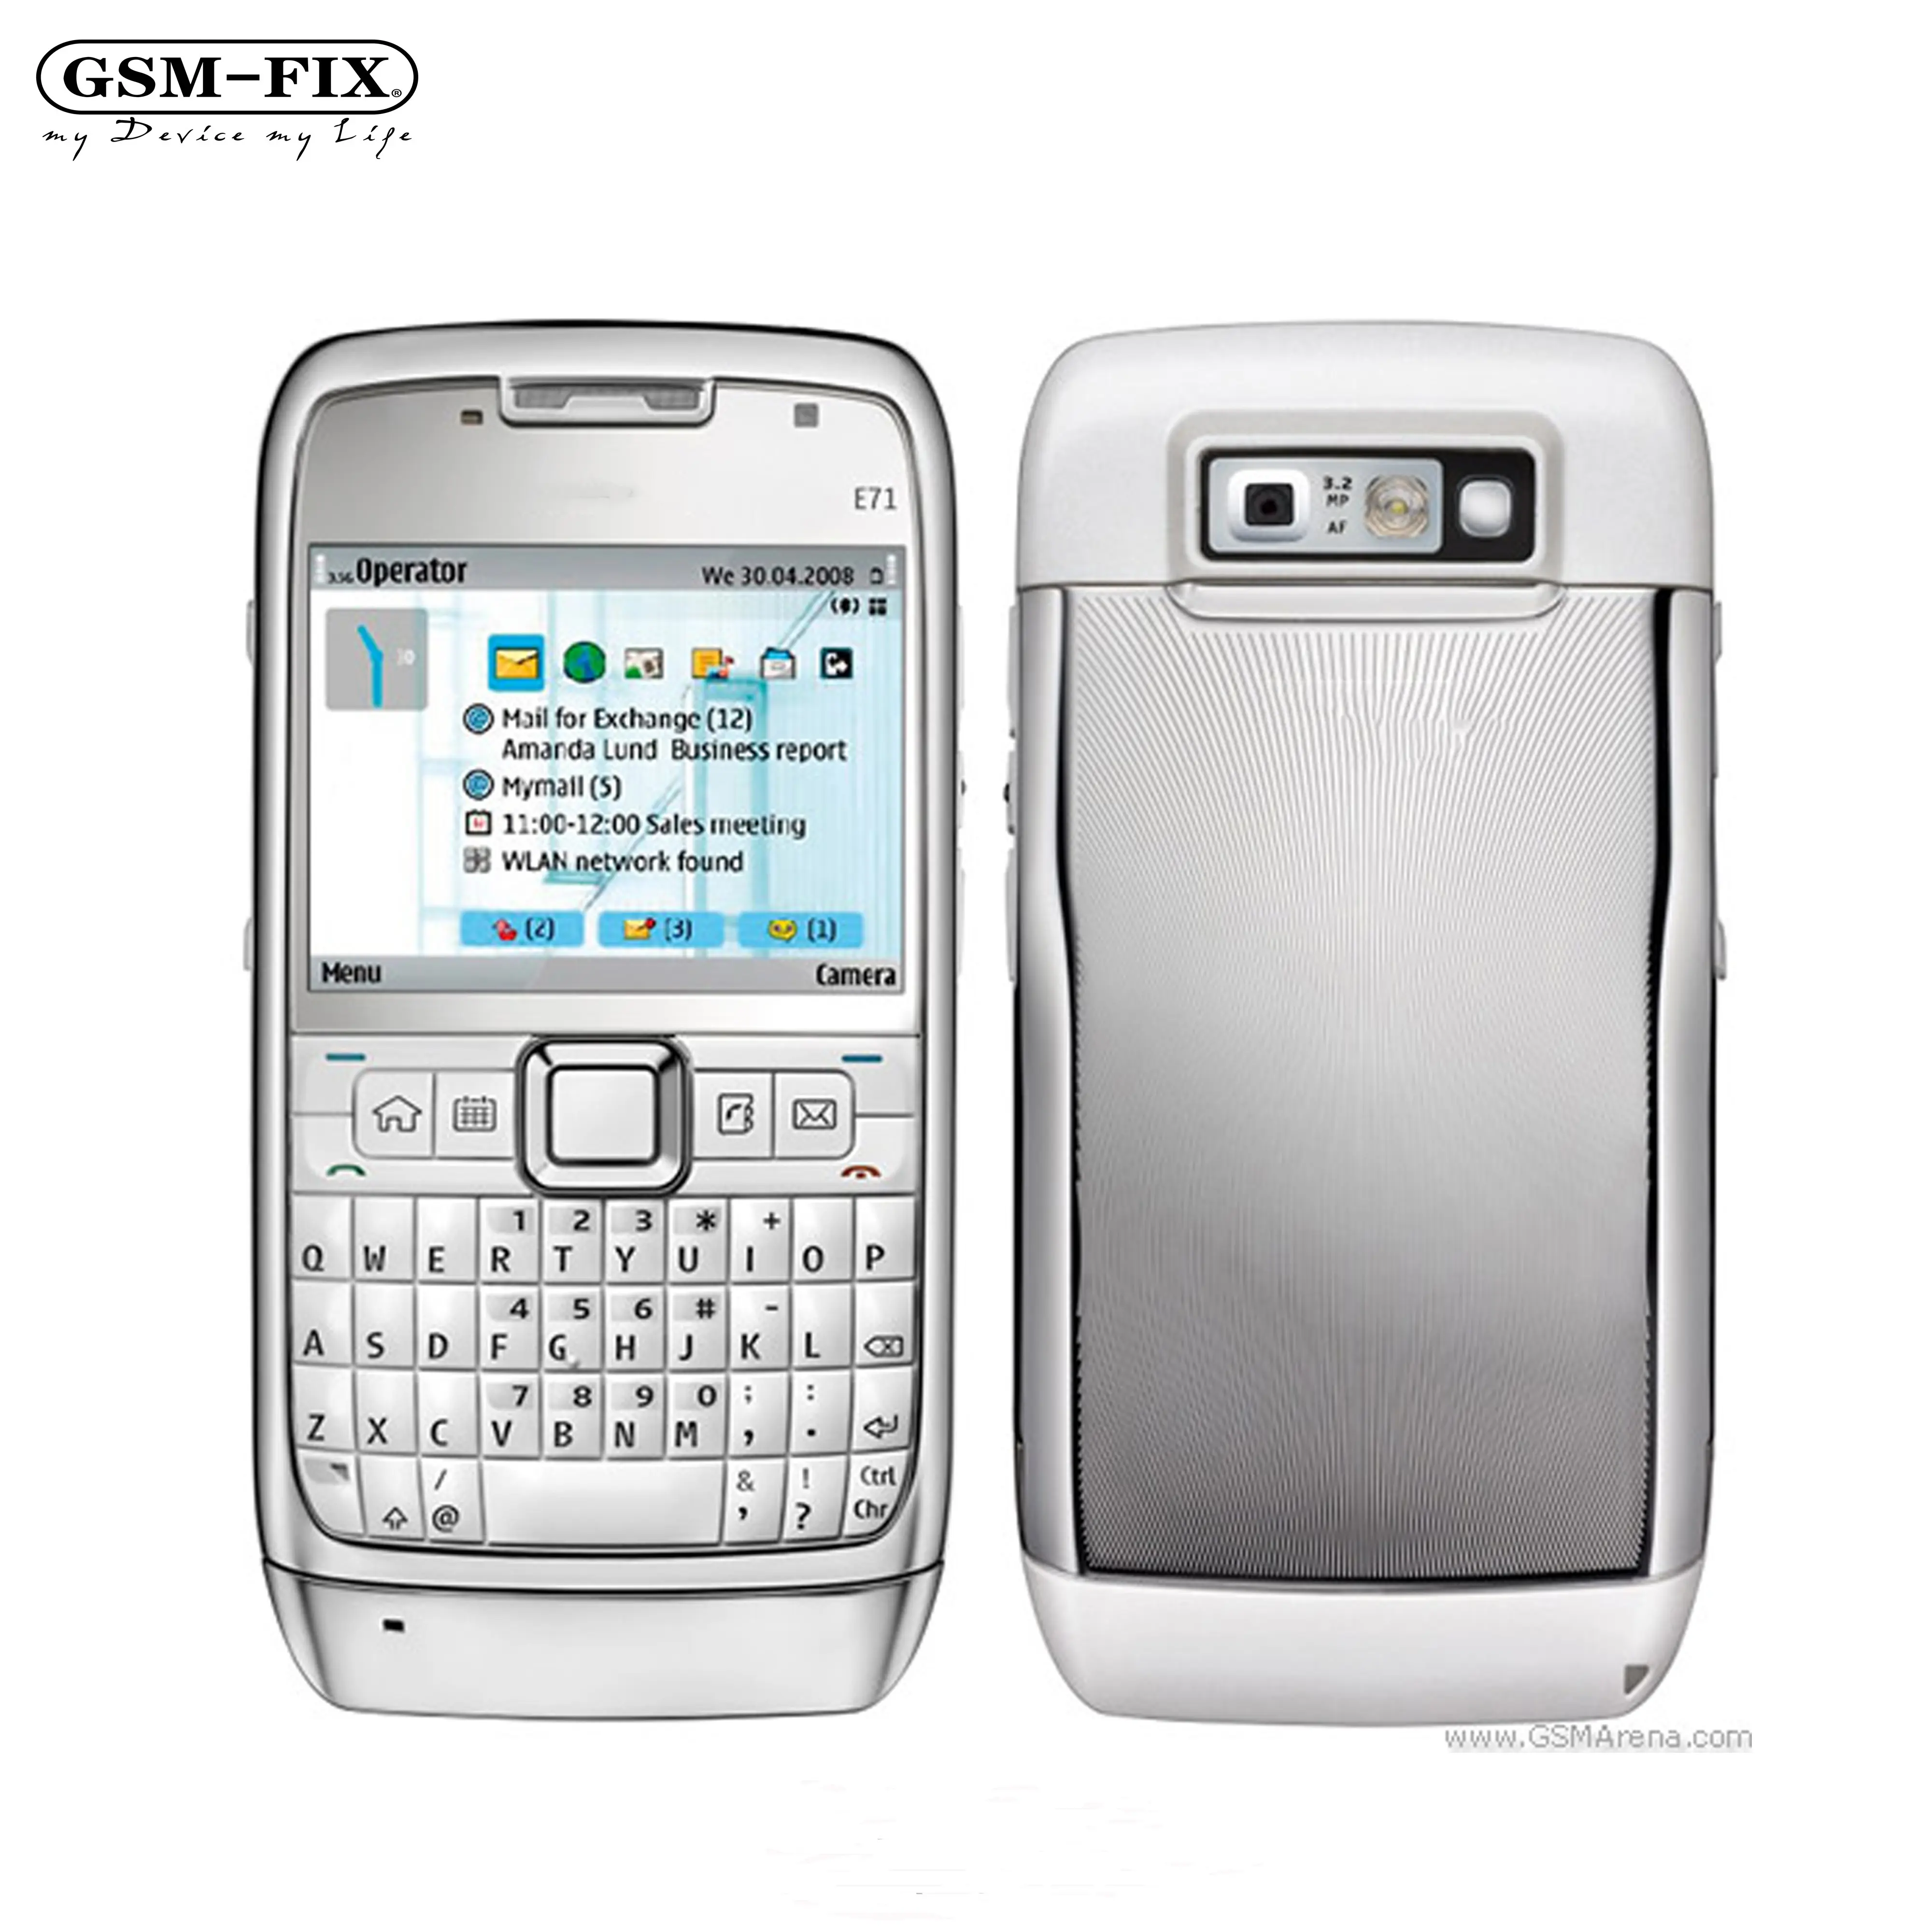 GSM-FIX orijinal E71 Nokia cep telefonu için 3.2MP 3G Unlocked Nokia E71 QWERTY klavye cep telefonu özellik telefon